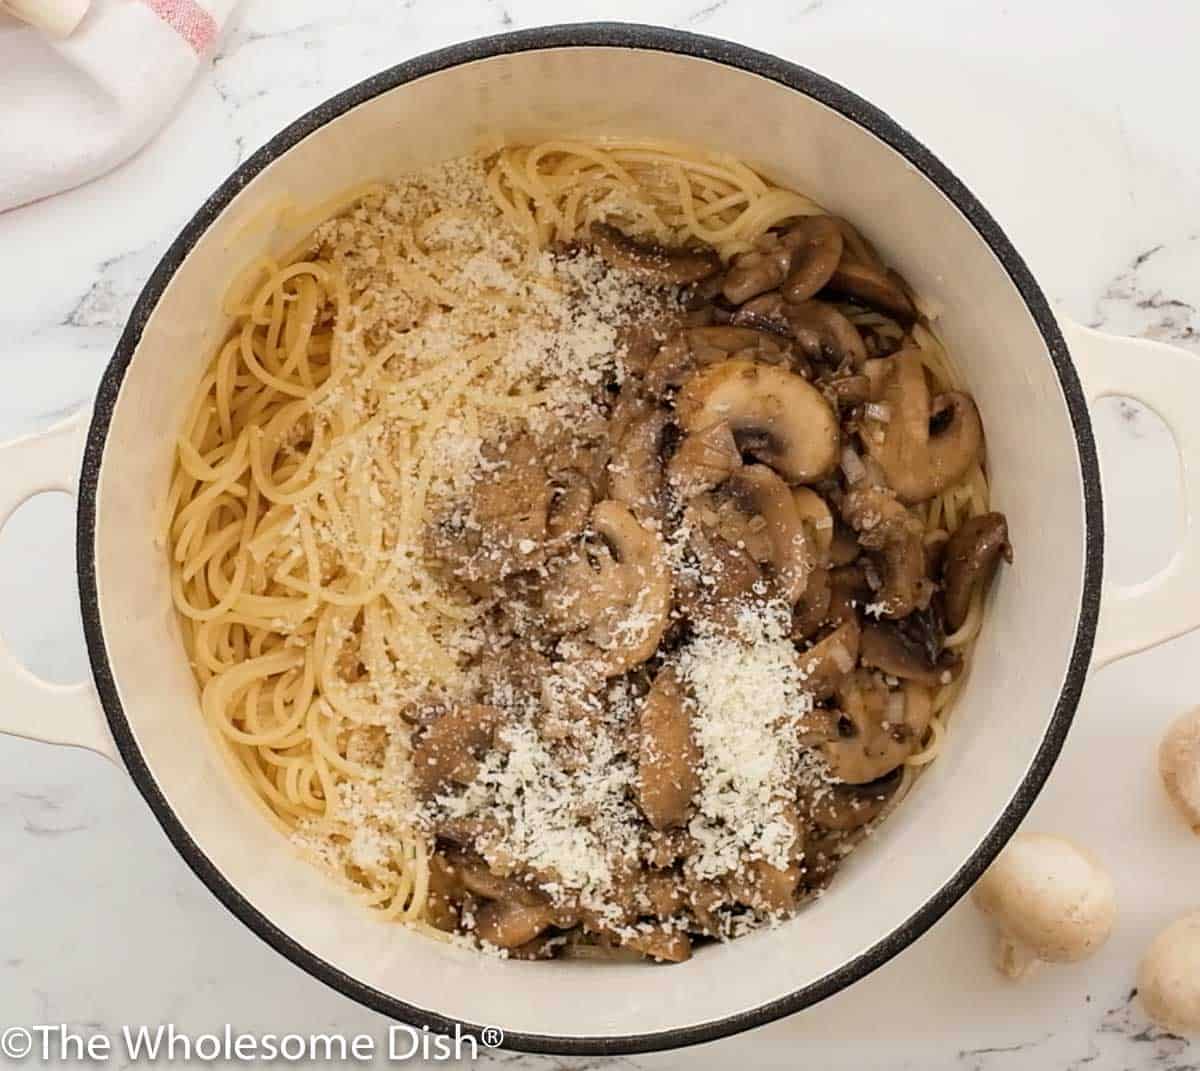 Large pot full of pasta, mushroom sauce, and parmesan.